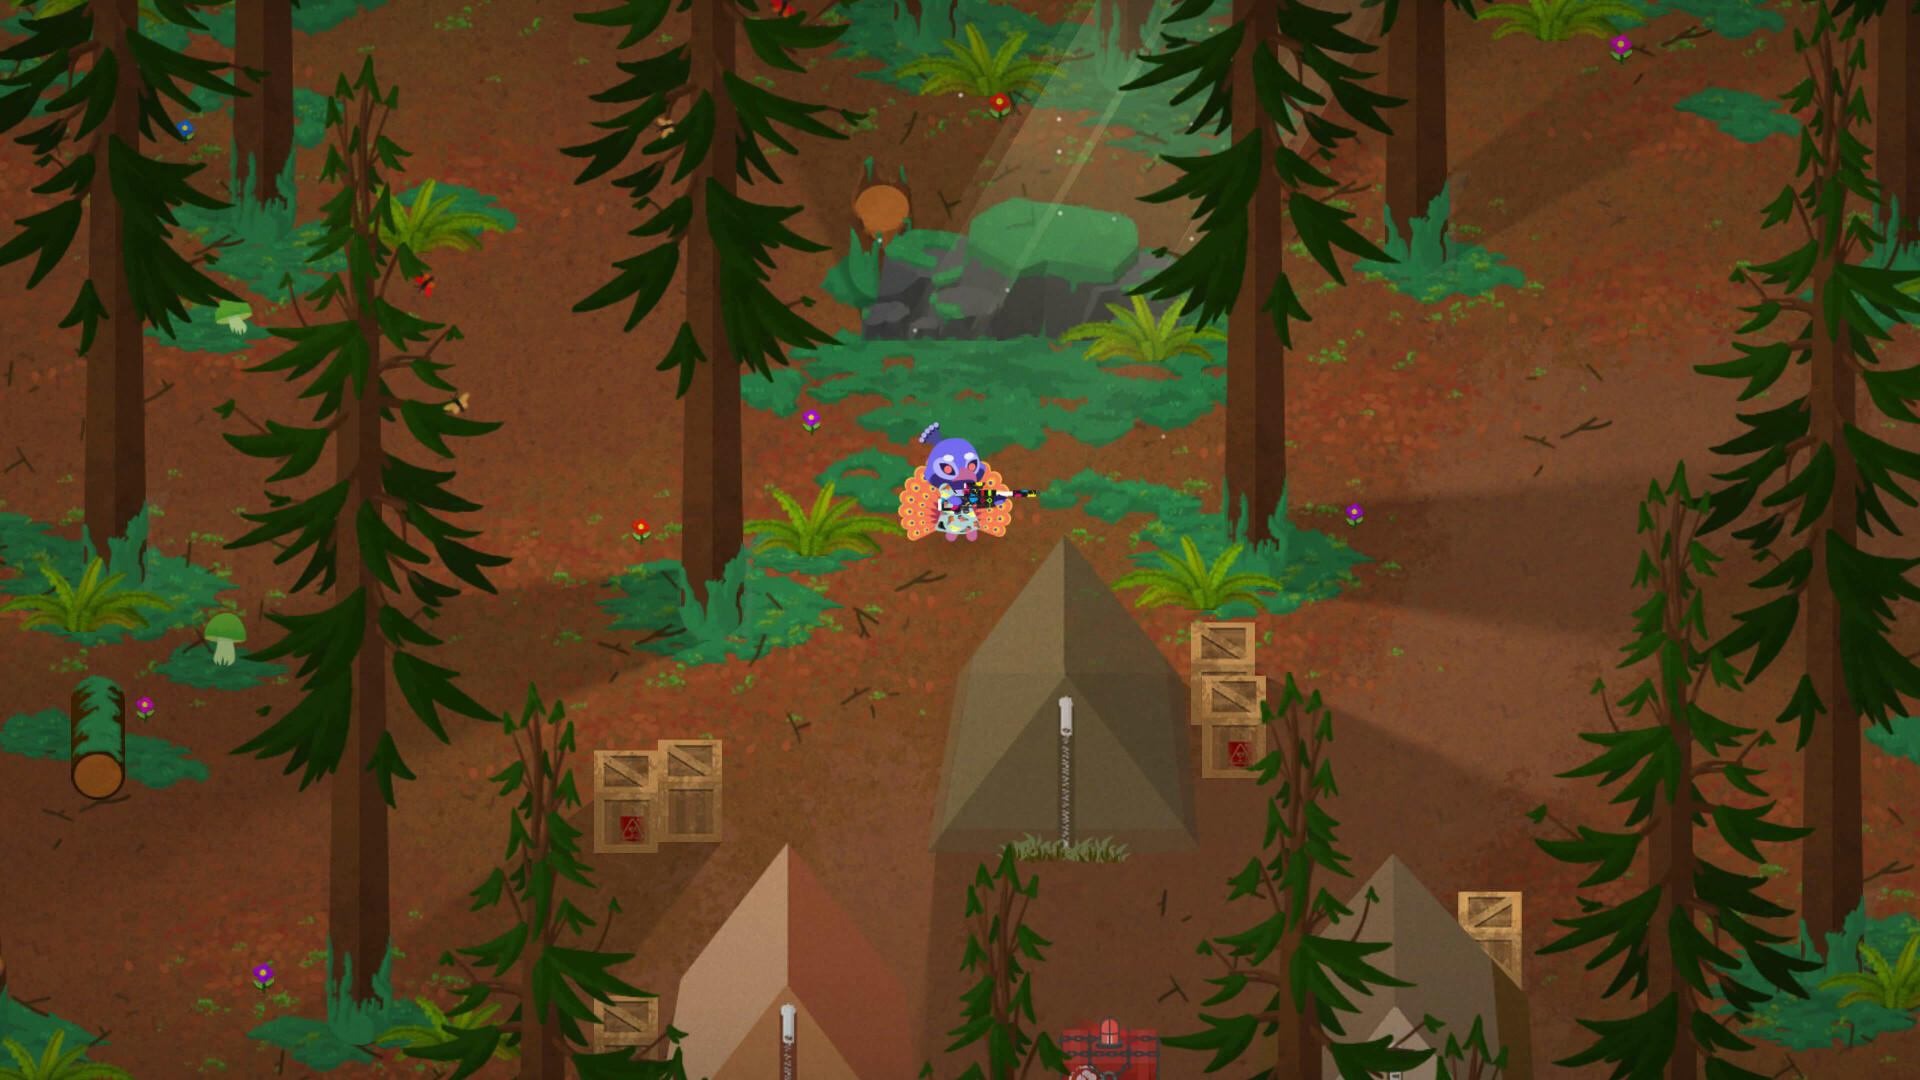 Super Animal Royale screenshot game